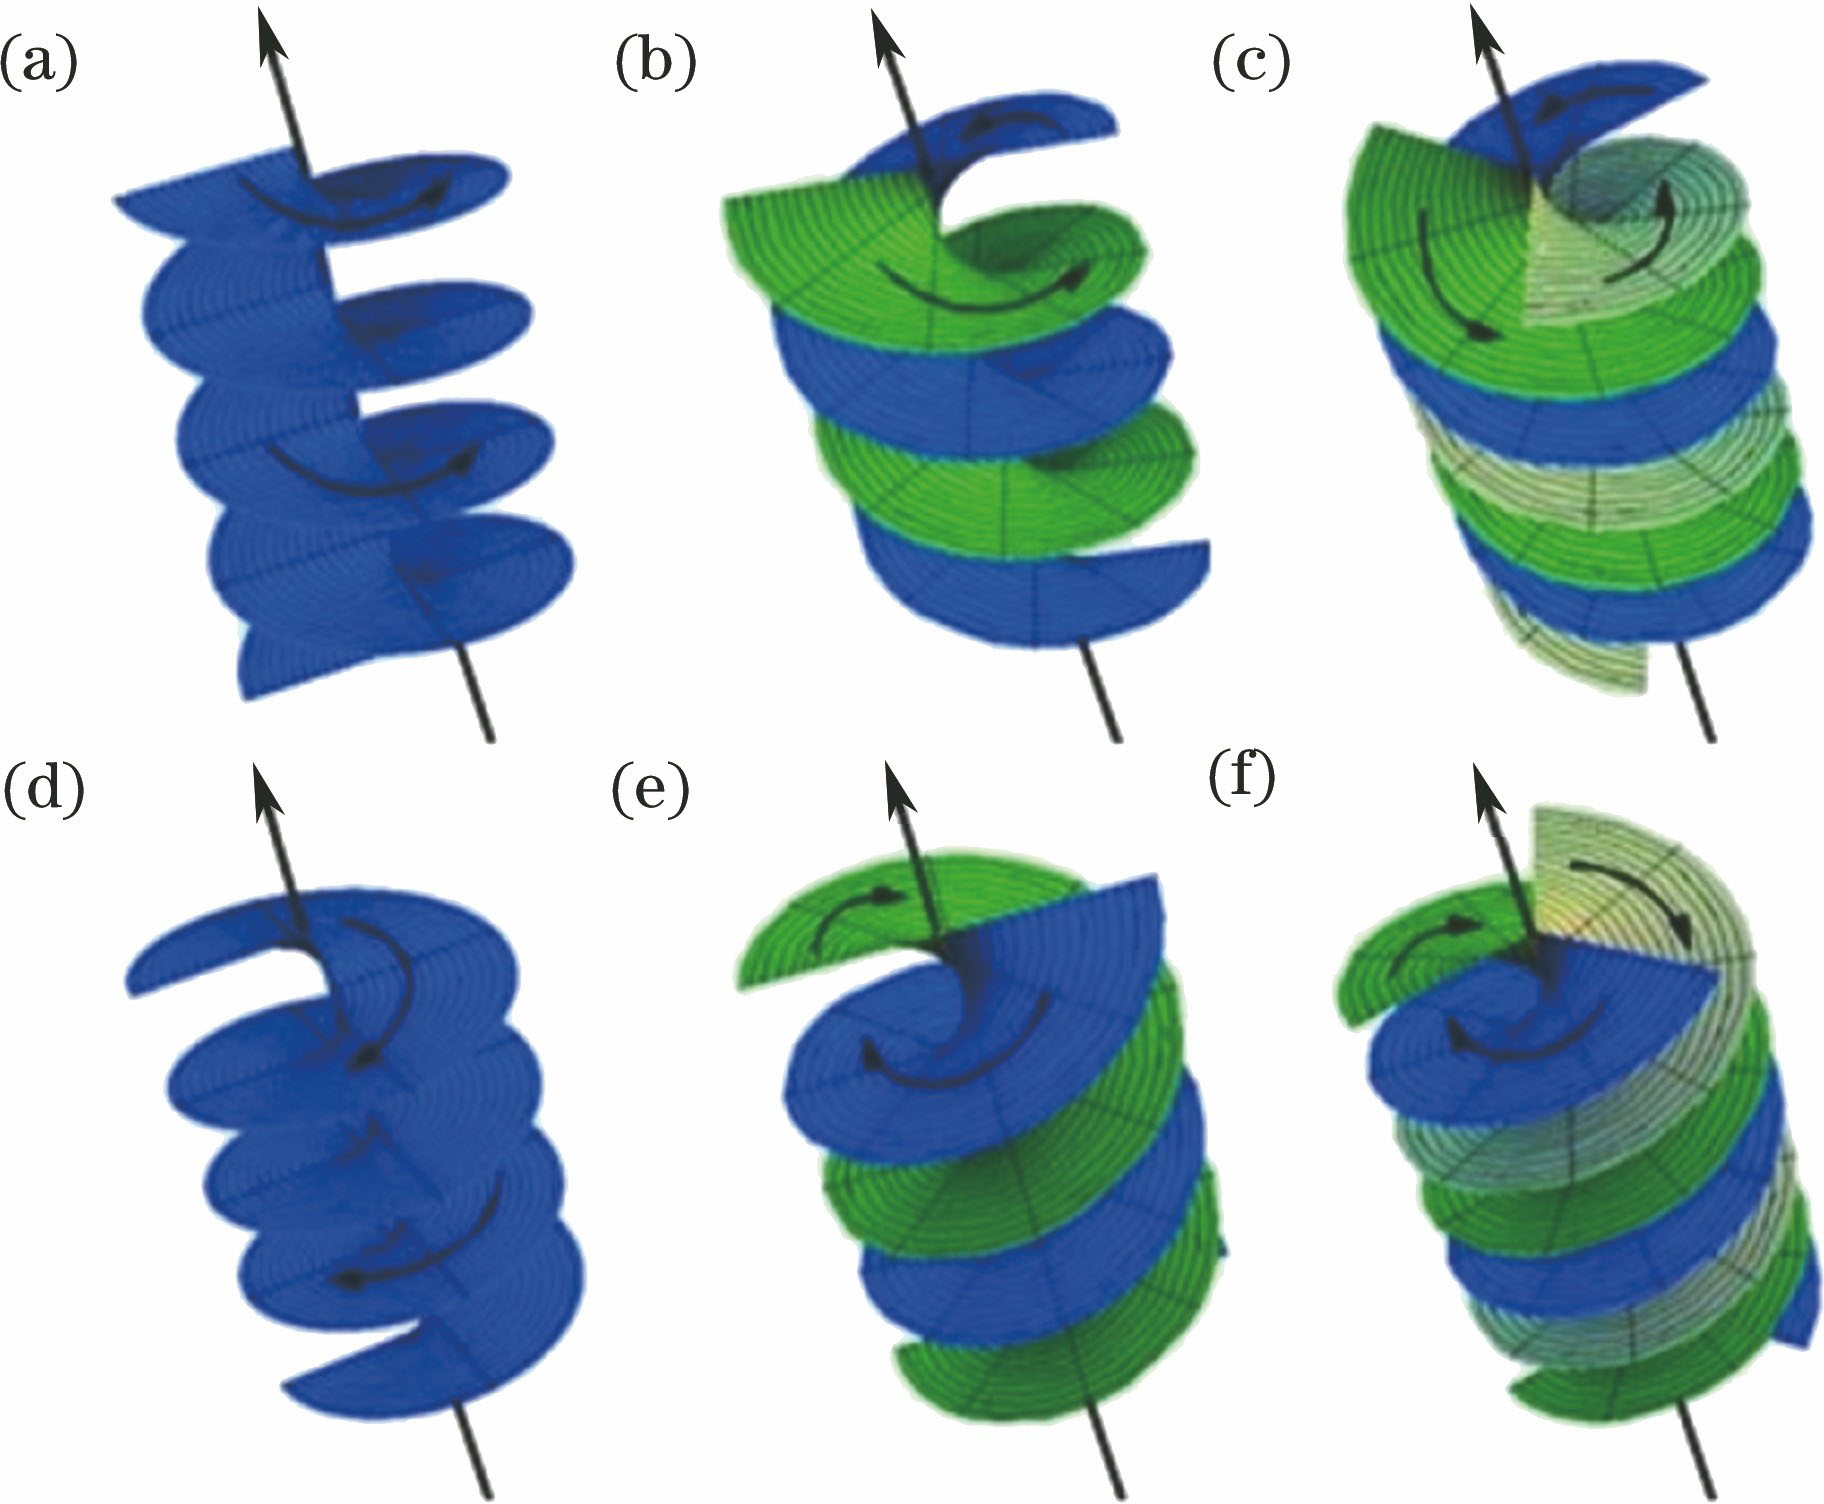 Spiral wavefront structures[93]. (a)-(c) Right-handed spirals; (d)-(f) left-handed spirals